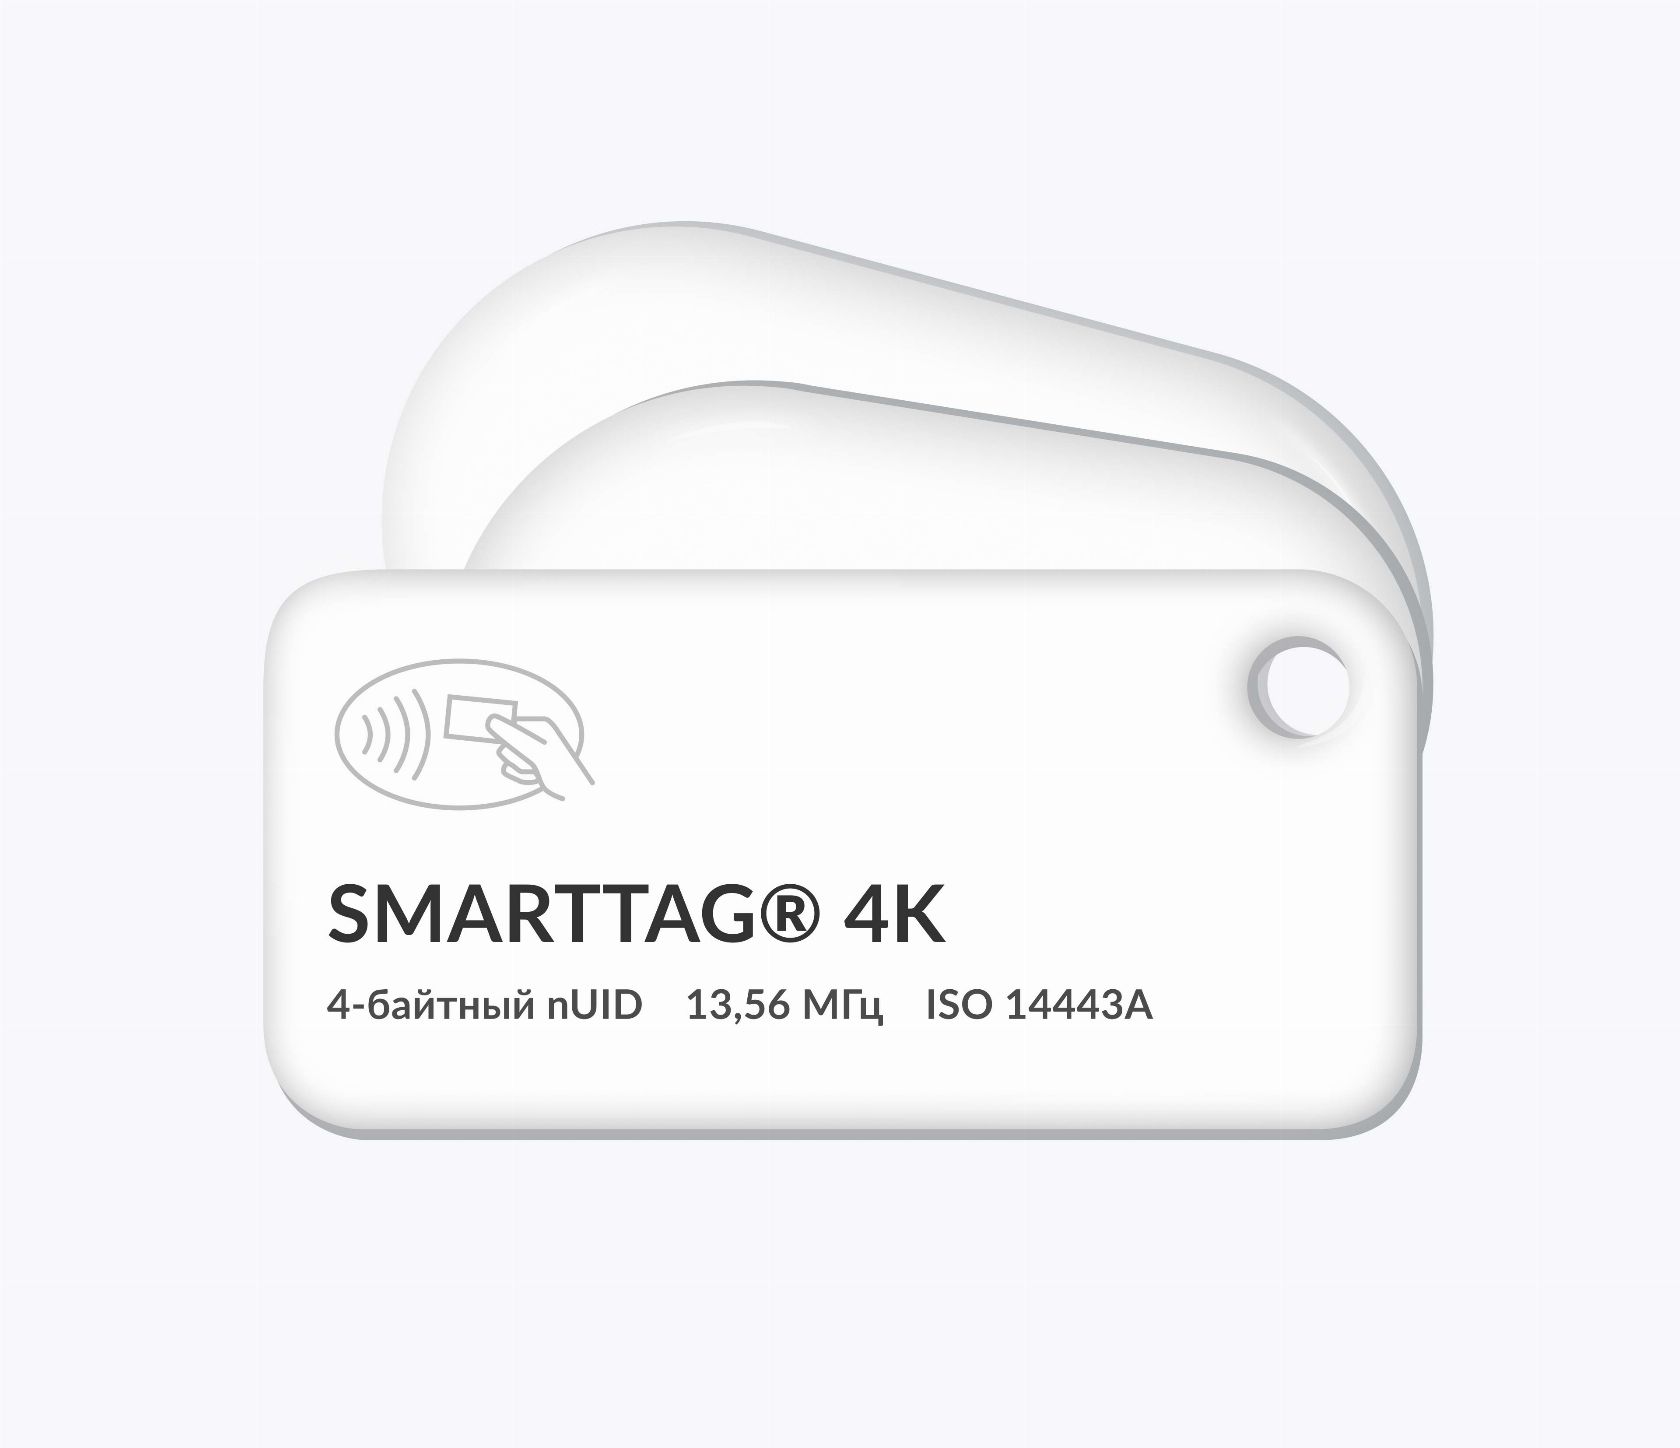 RFID-брелоки NEOKEY® с чипом SMARTTAG® 4k 4 byte nUID и вашим логотипом